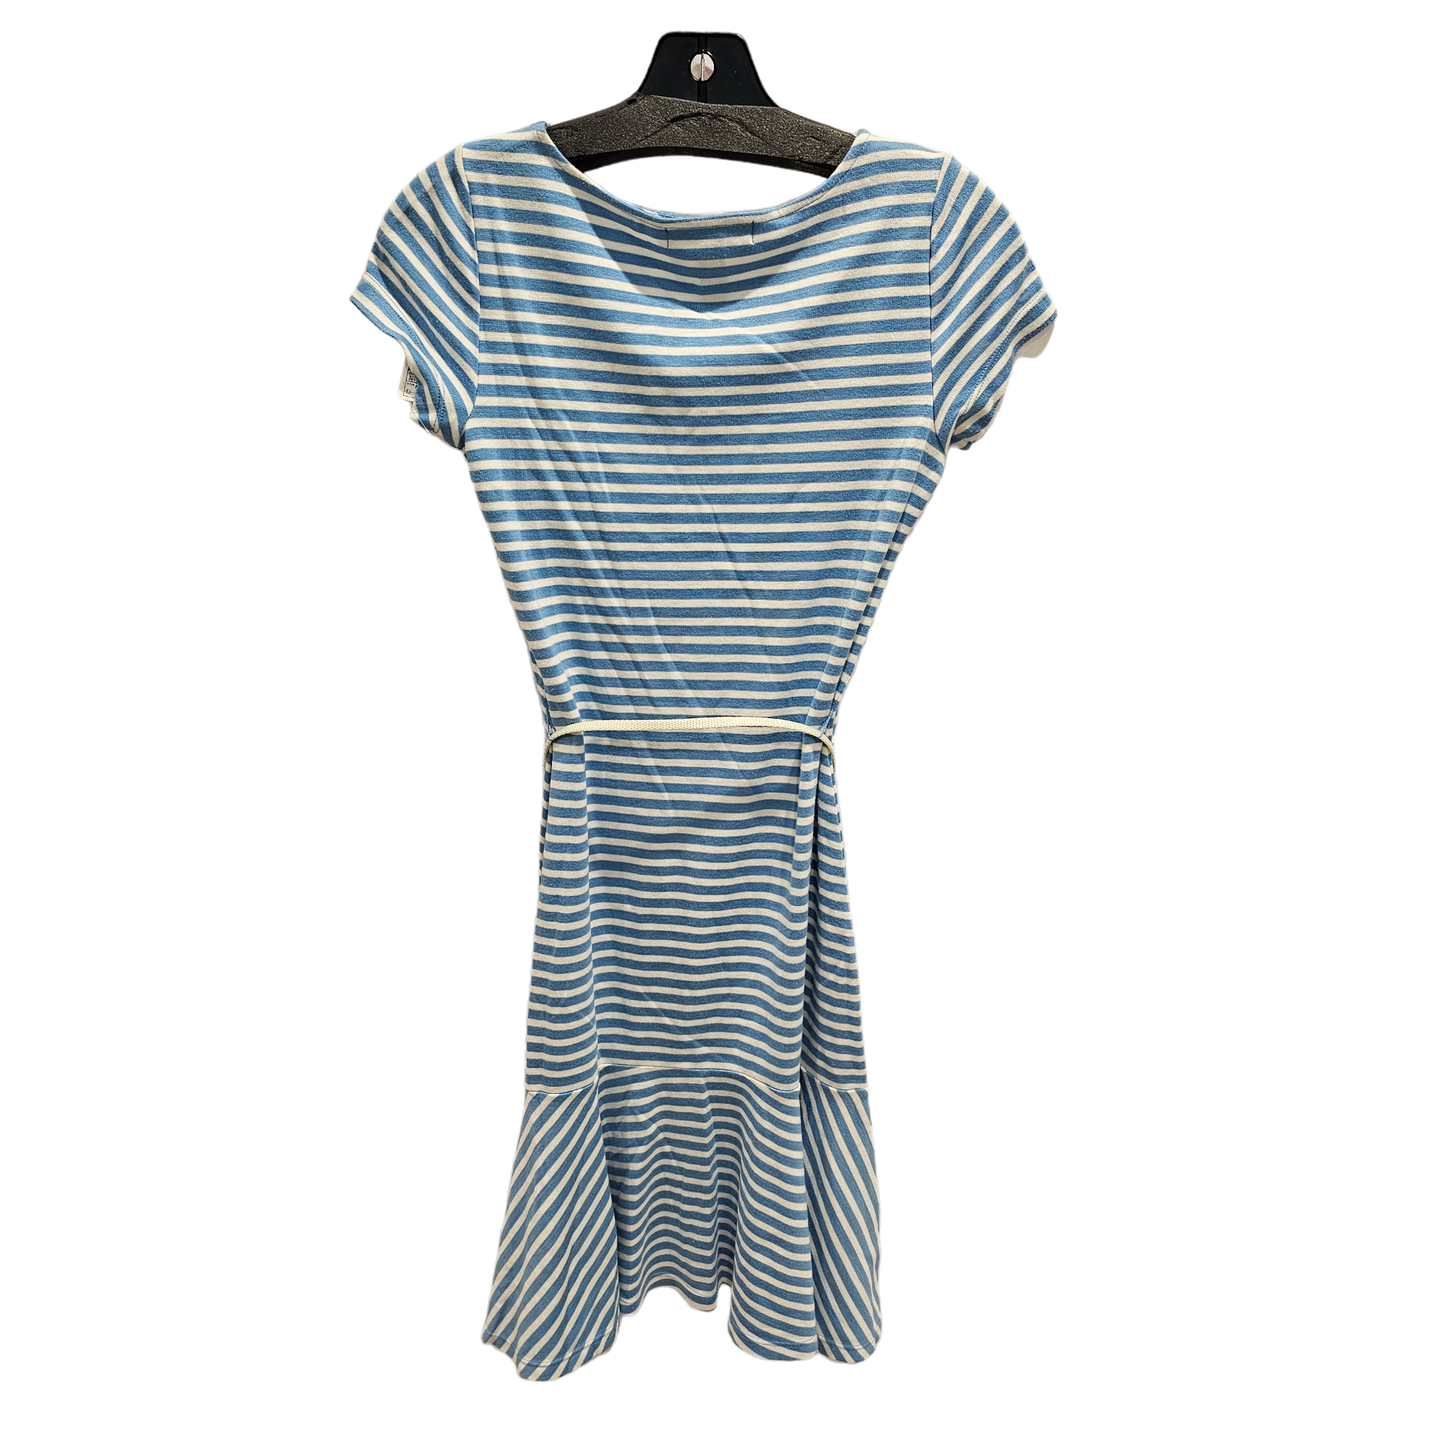 Dress Casual Short By Lauren By Ralph Lauren  Size: Petite   Xs